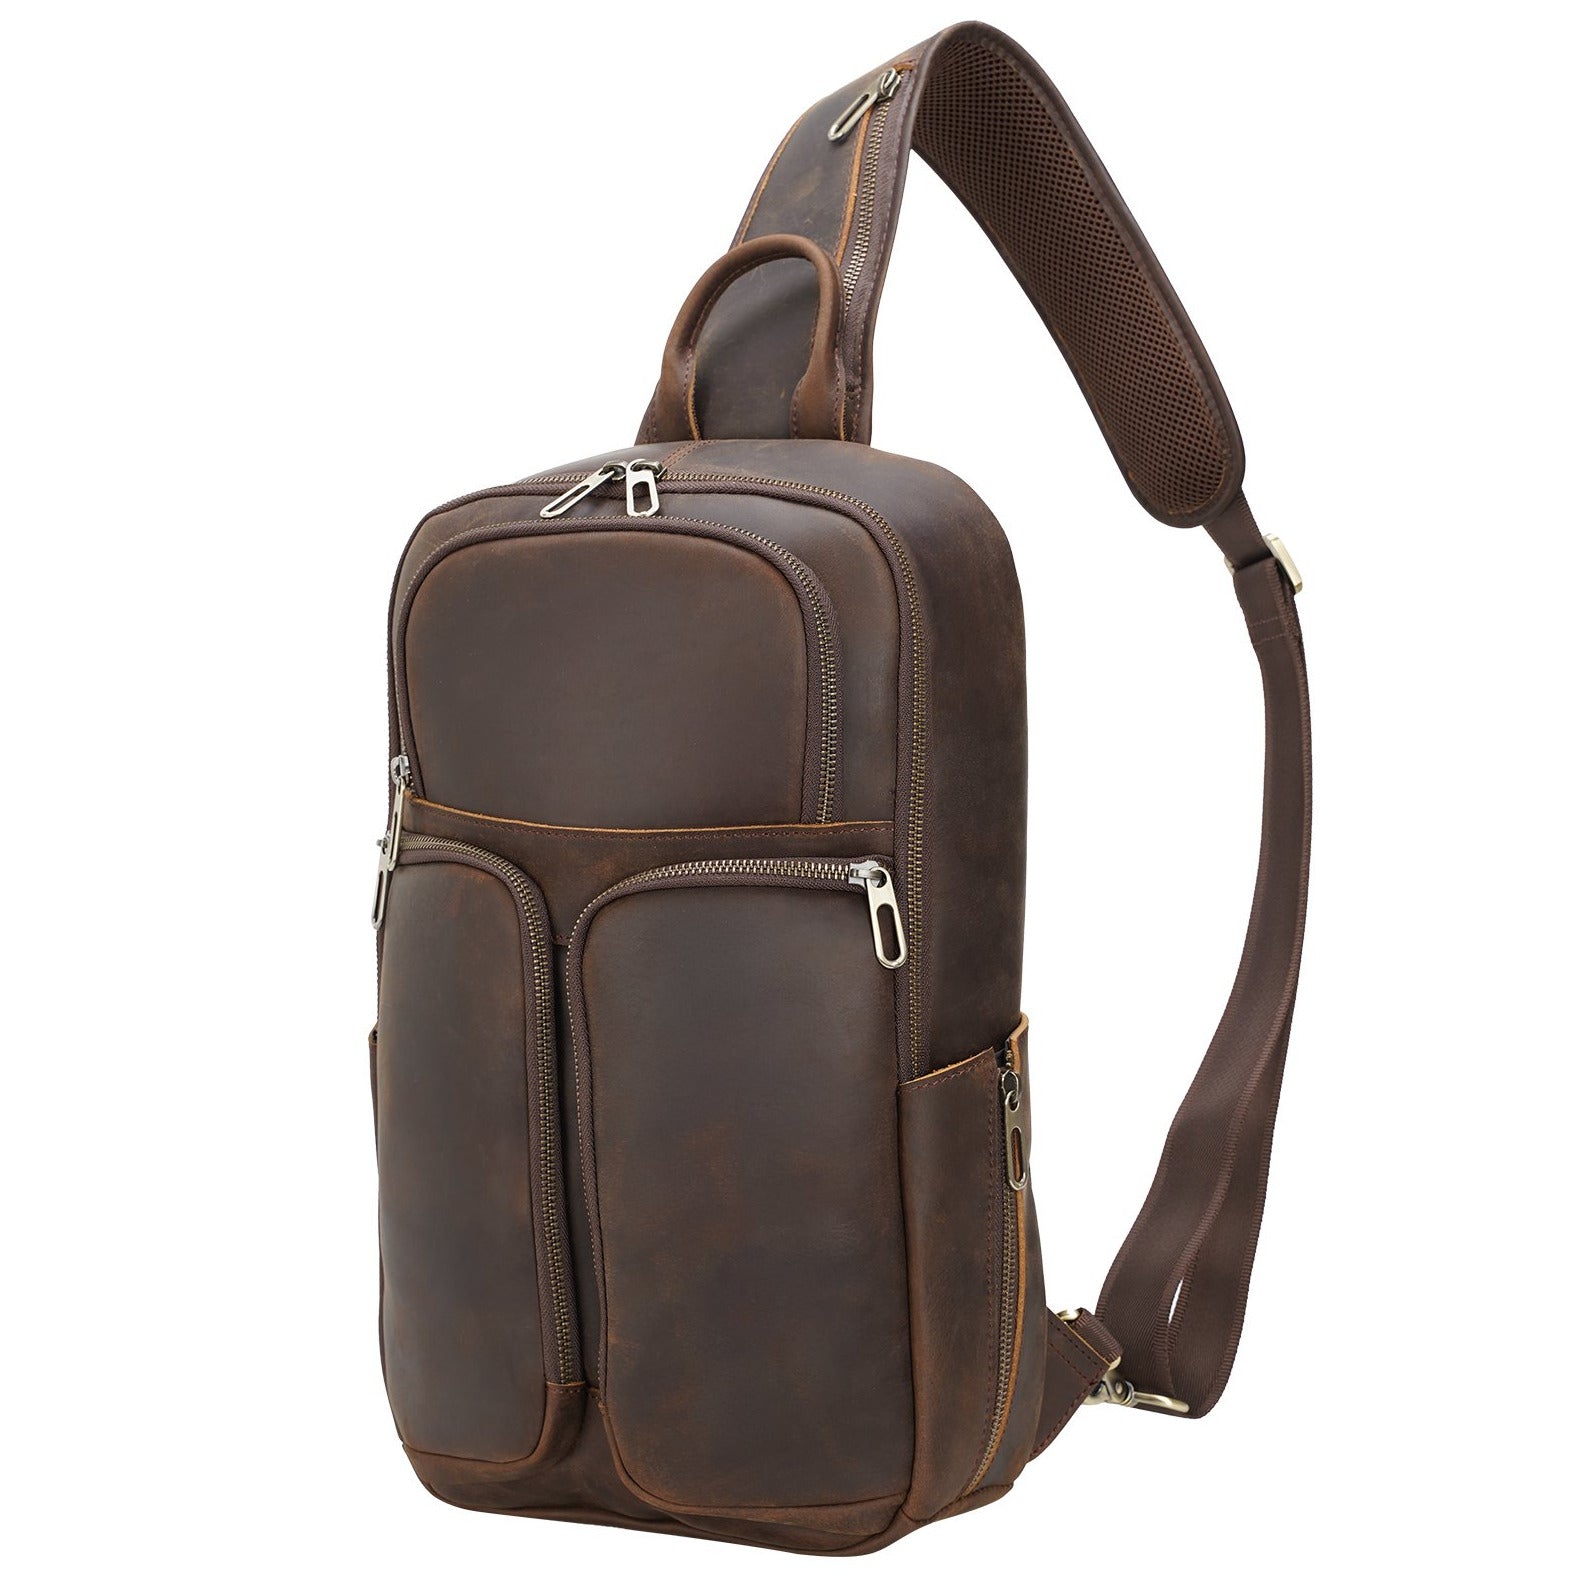 Men Messenger Bags Genuine Leather Male Mini Travel Bag Man Shoulder Bags  Small Crossbody Bag For Mens Men Leather Bag